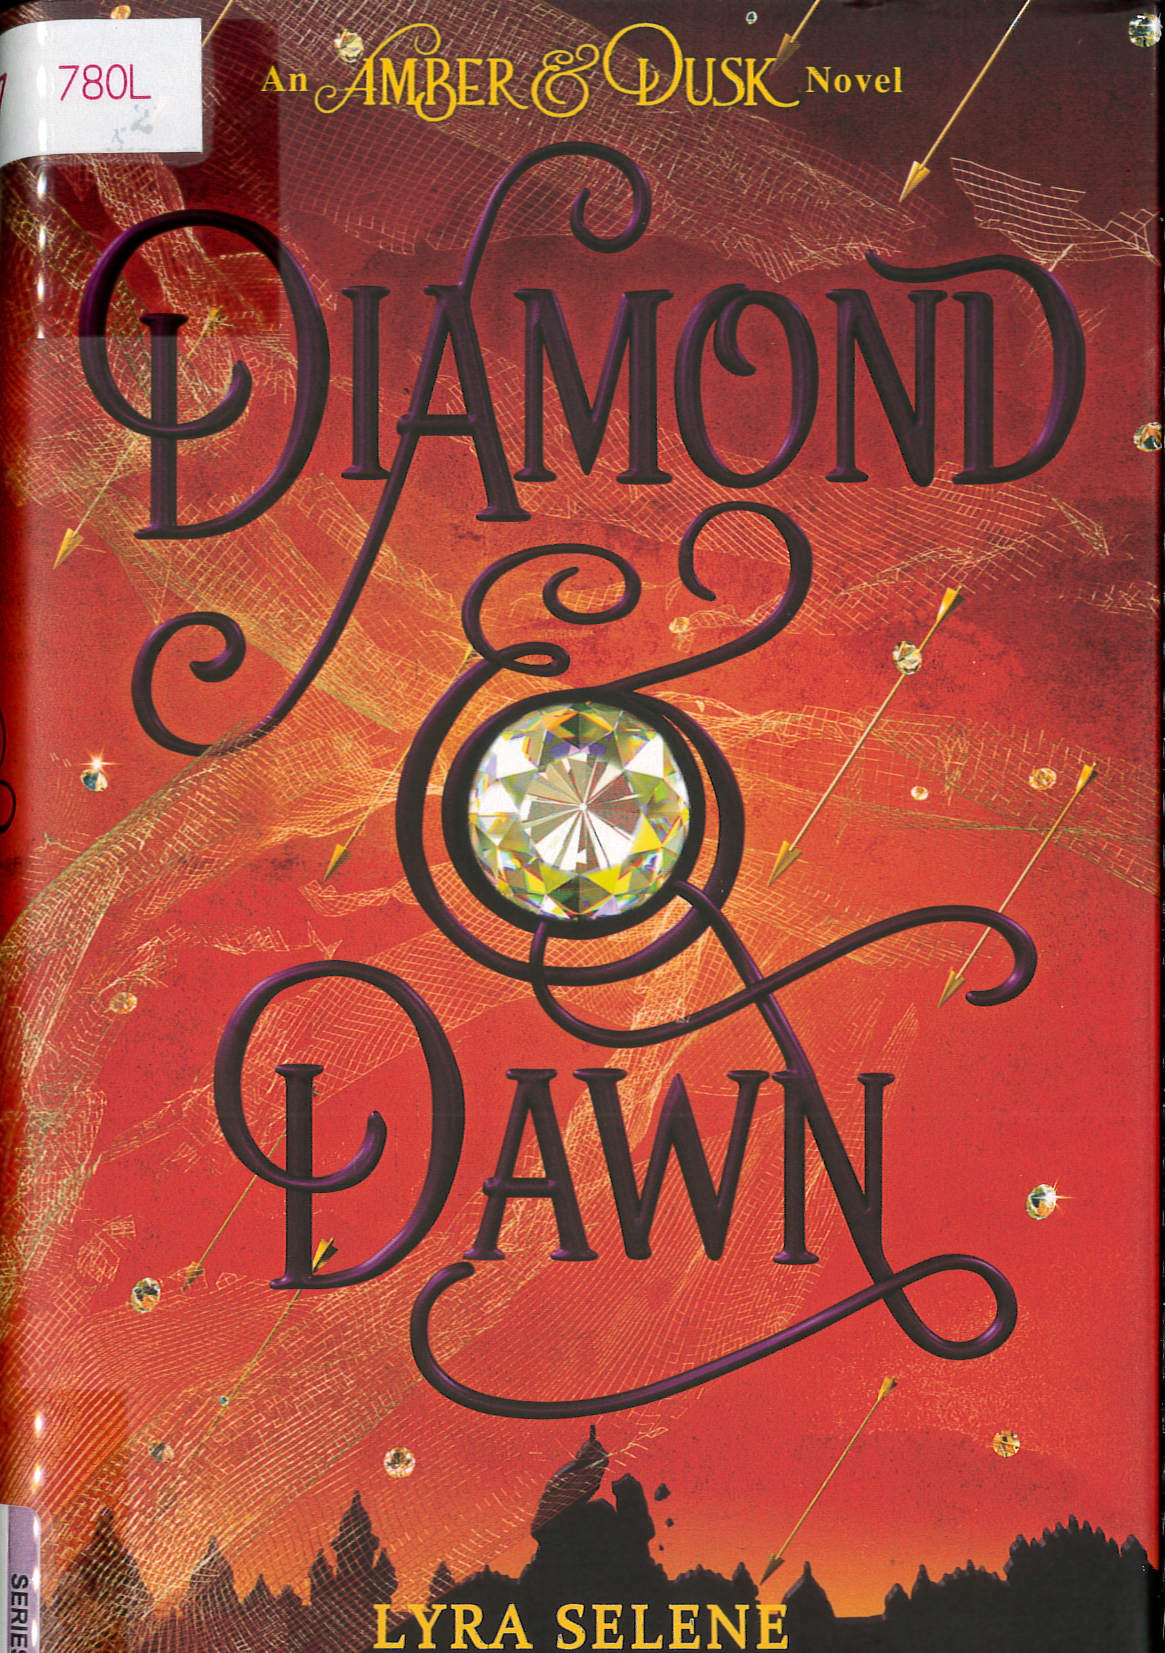 Amber & dusk(2) : Diamond & dawn /